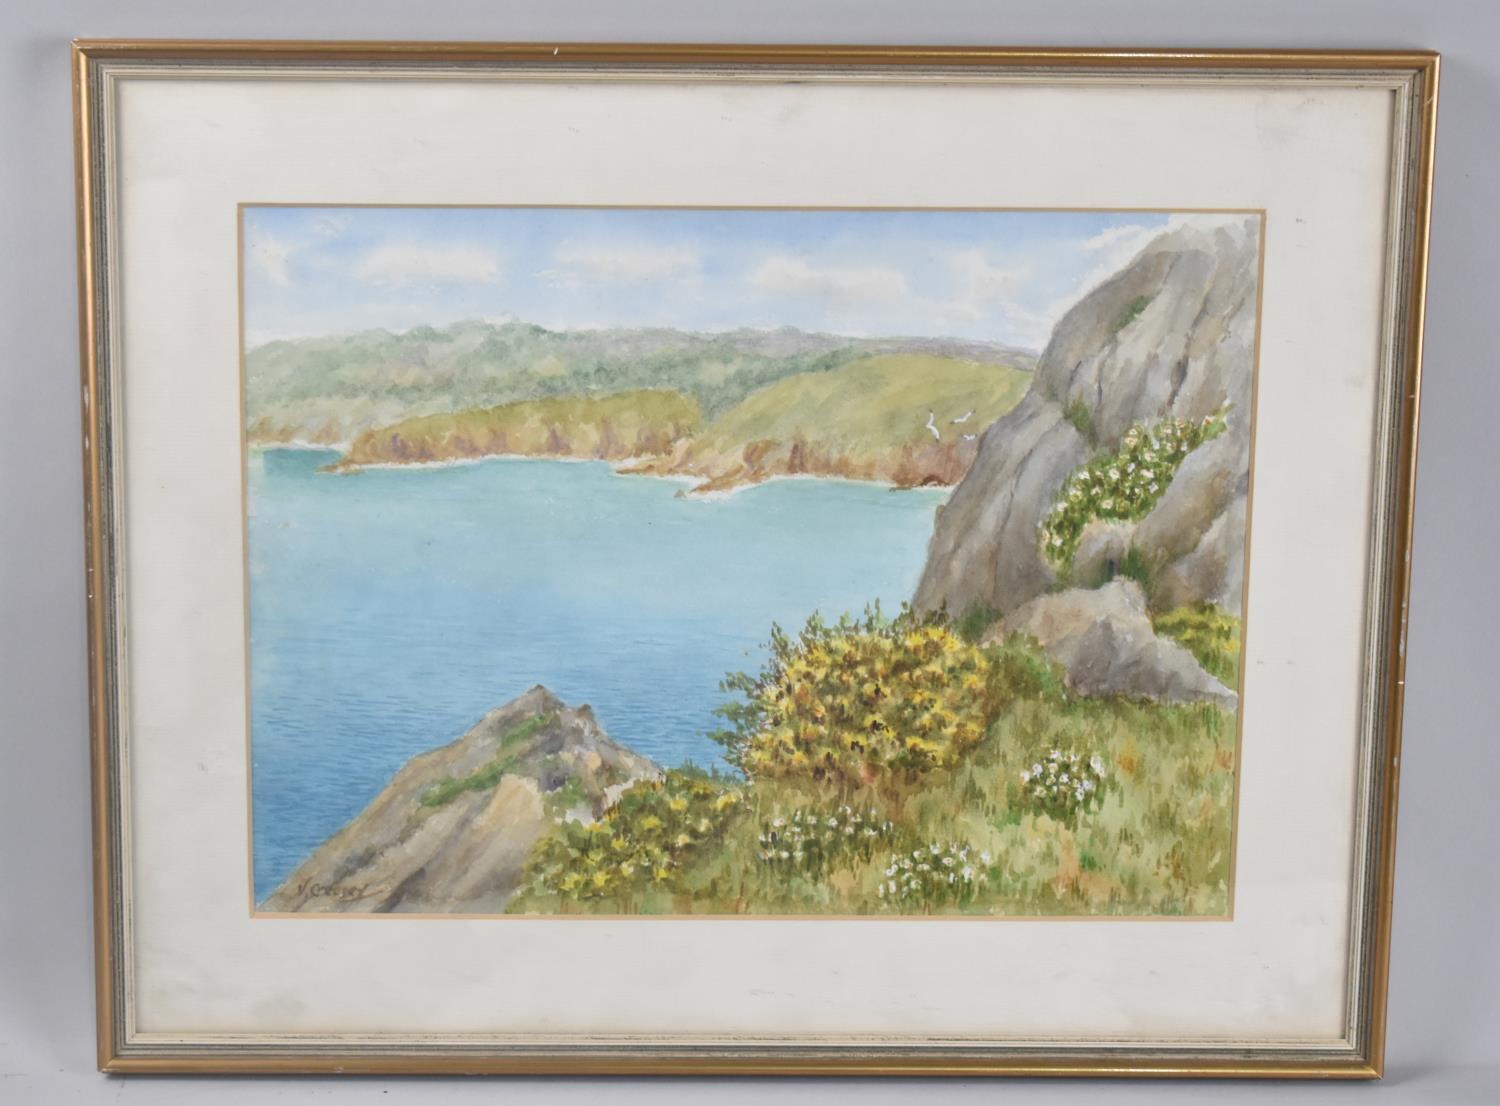 A Framed Seascape Watercolour, 37x27cm